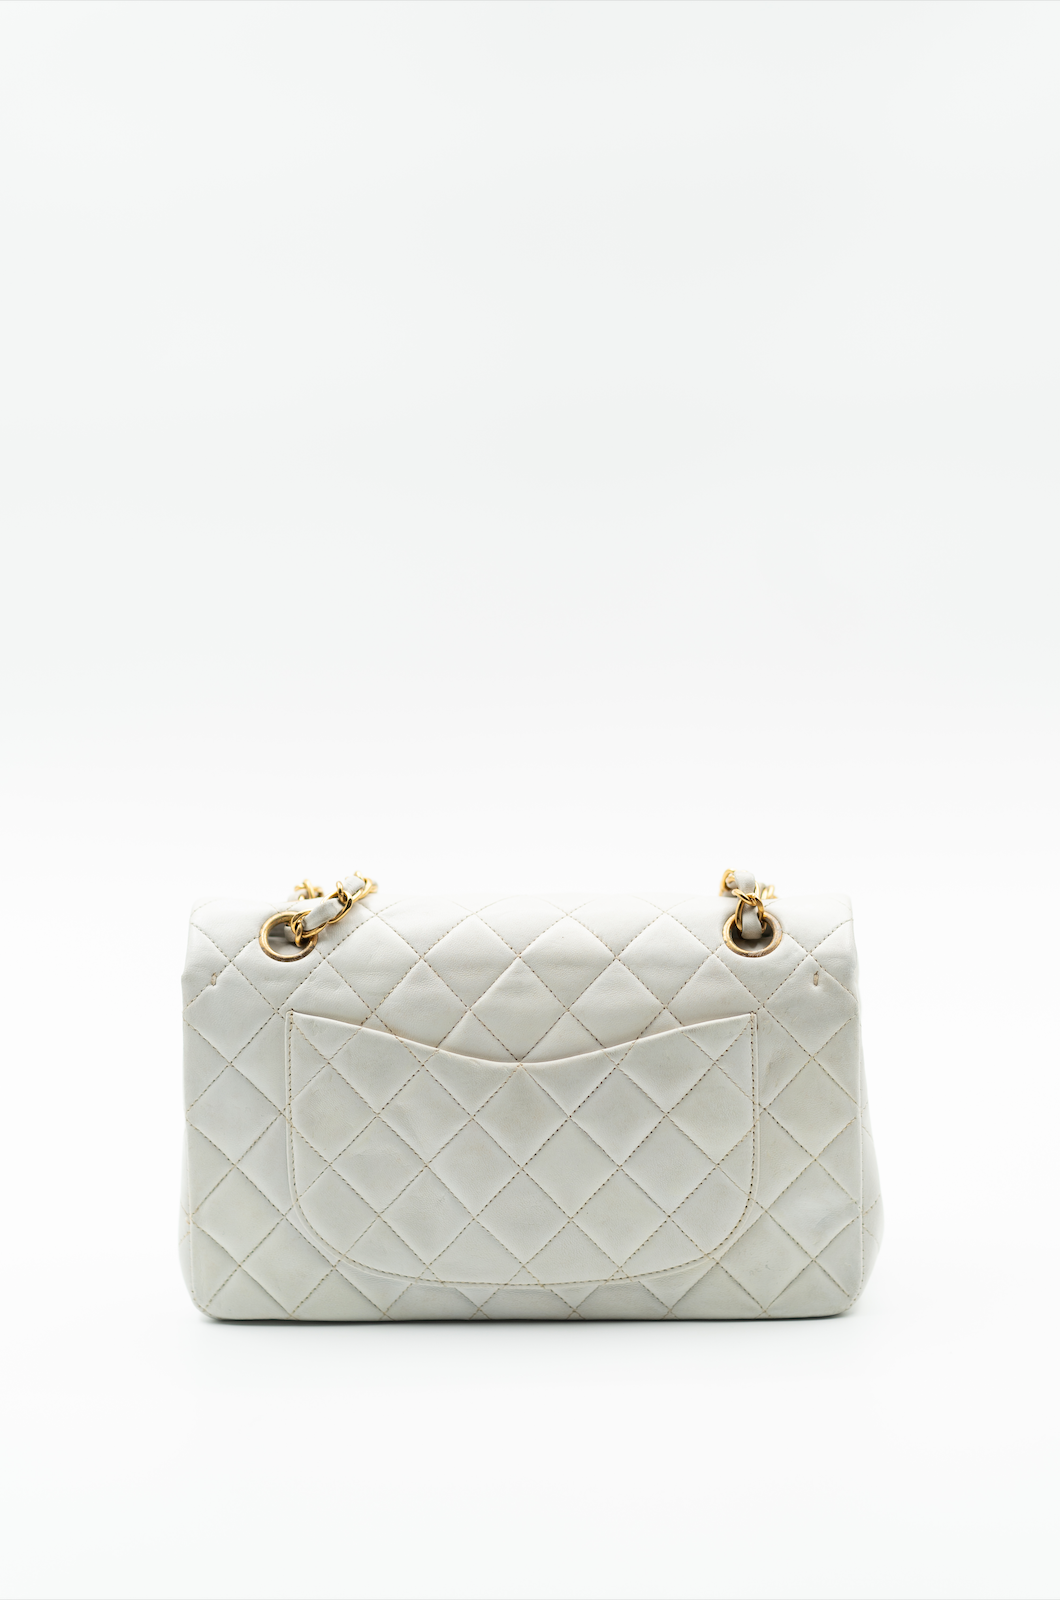 Chanel double flap bag white